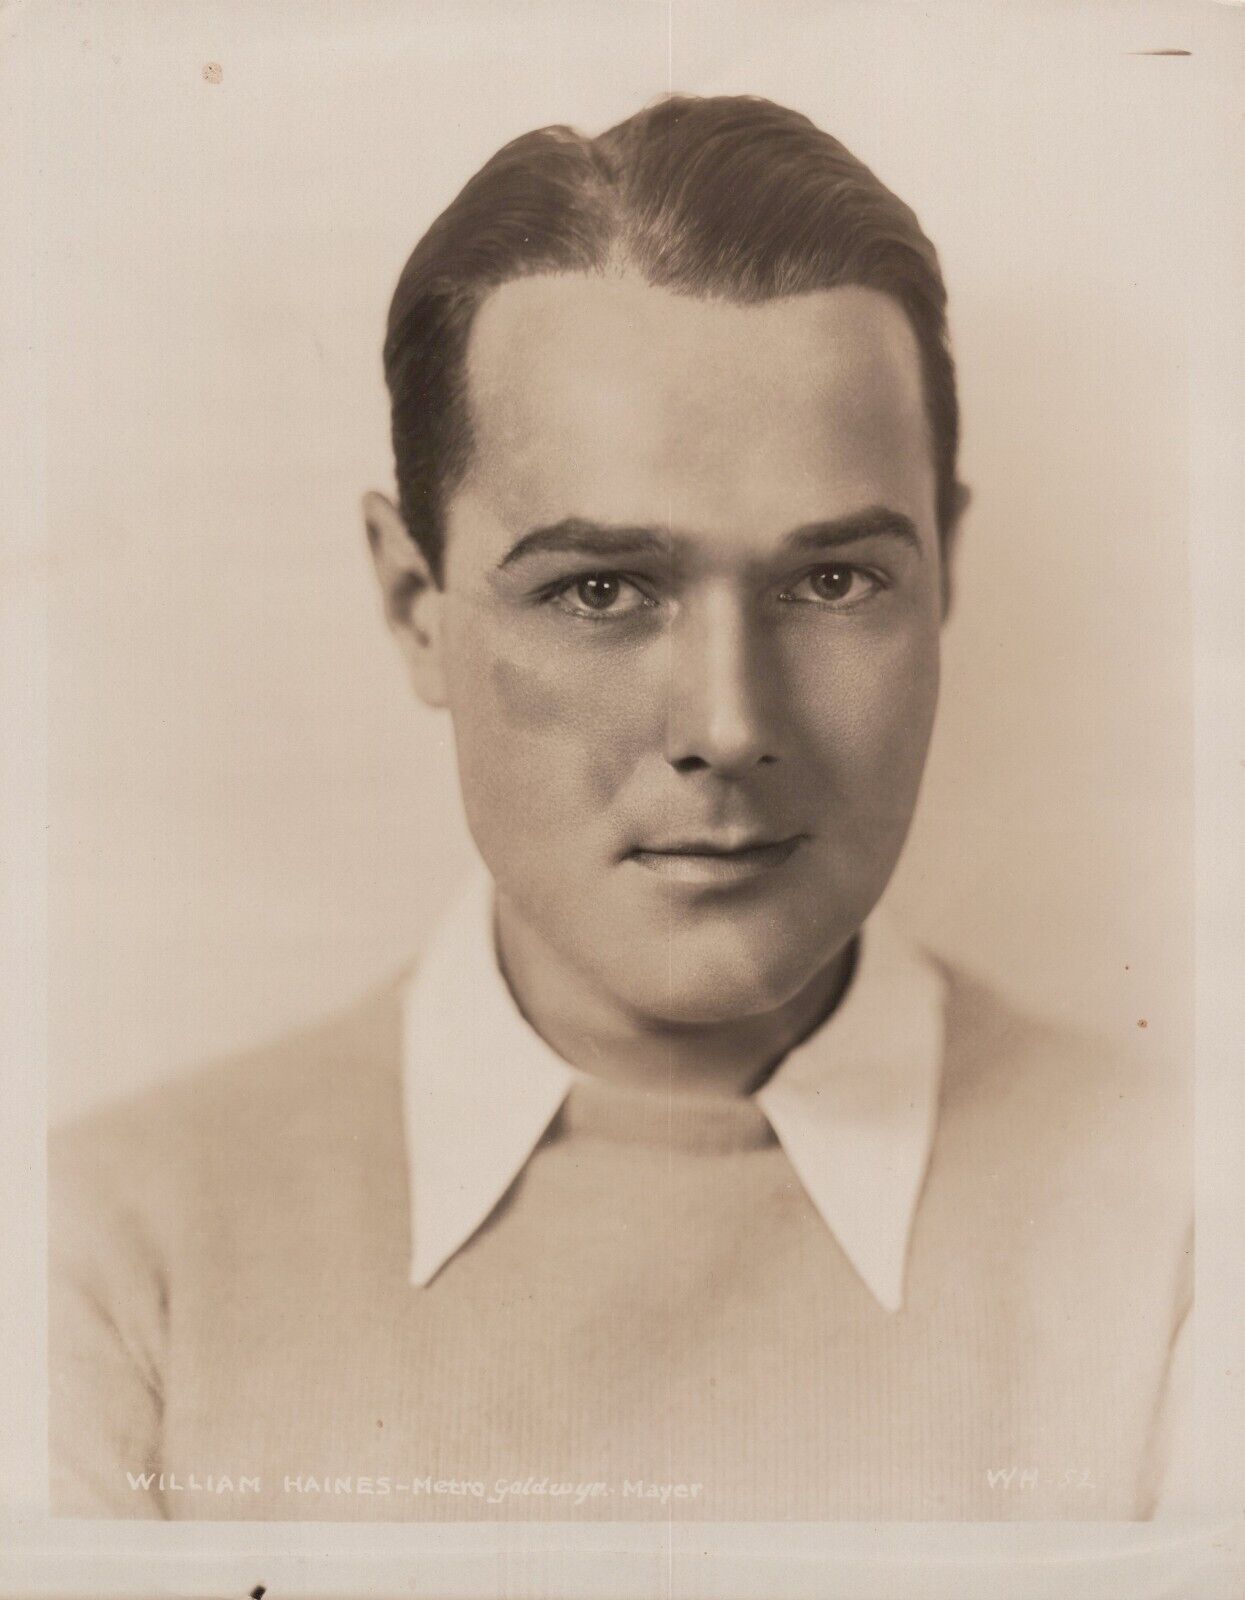 William Haines (1920s) ❤🎬 Handsome Actor - Original Vintage MGM Photo K 247